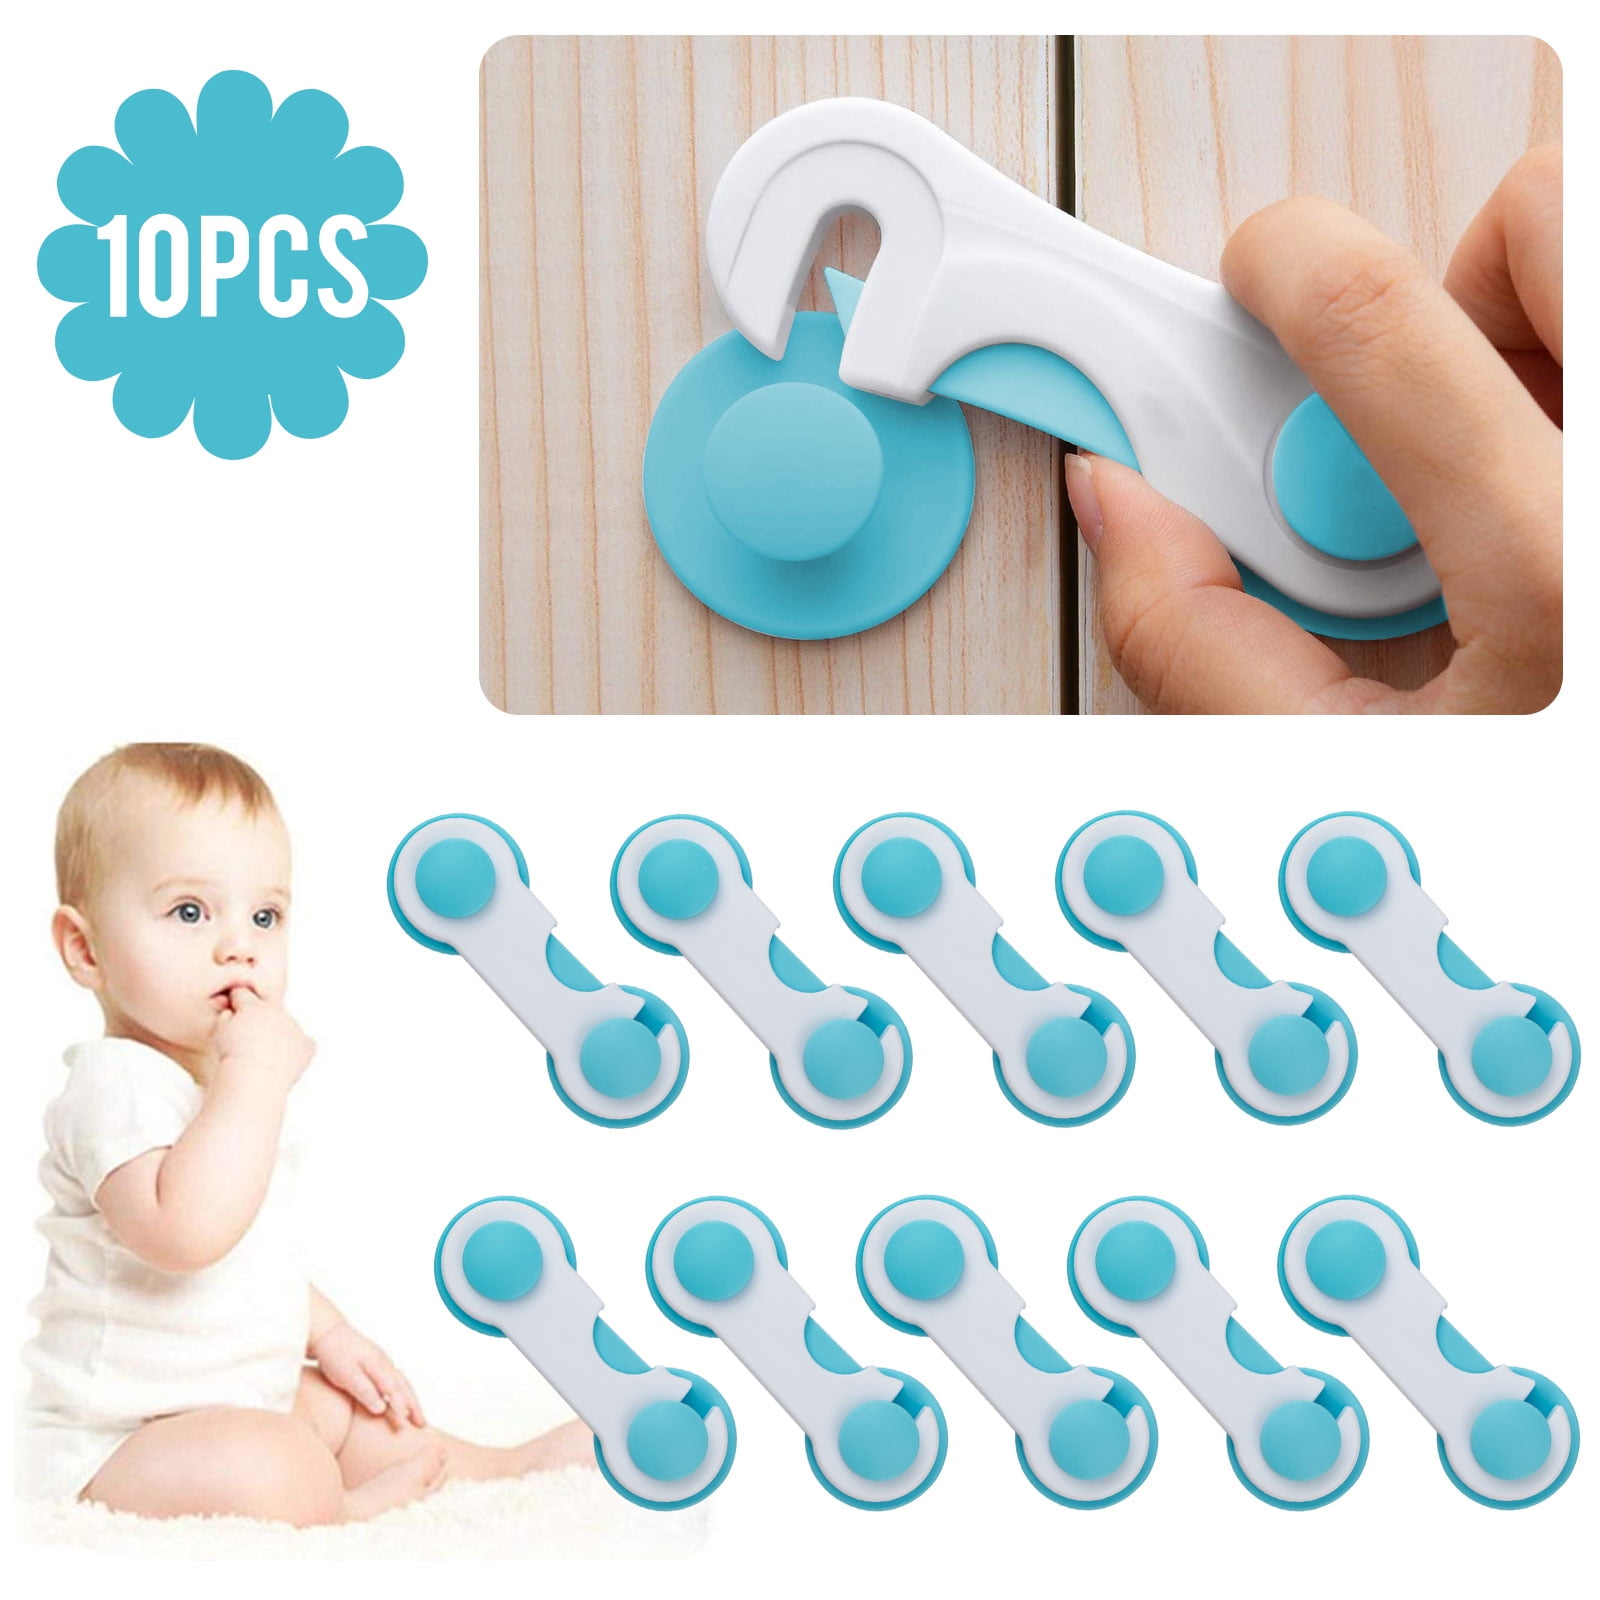 10pcs Child Infant Baby Kids Toddler Safety Door Cabinet Drawer Cupboard Lock MT 